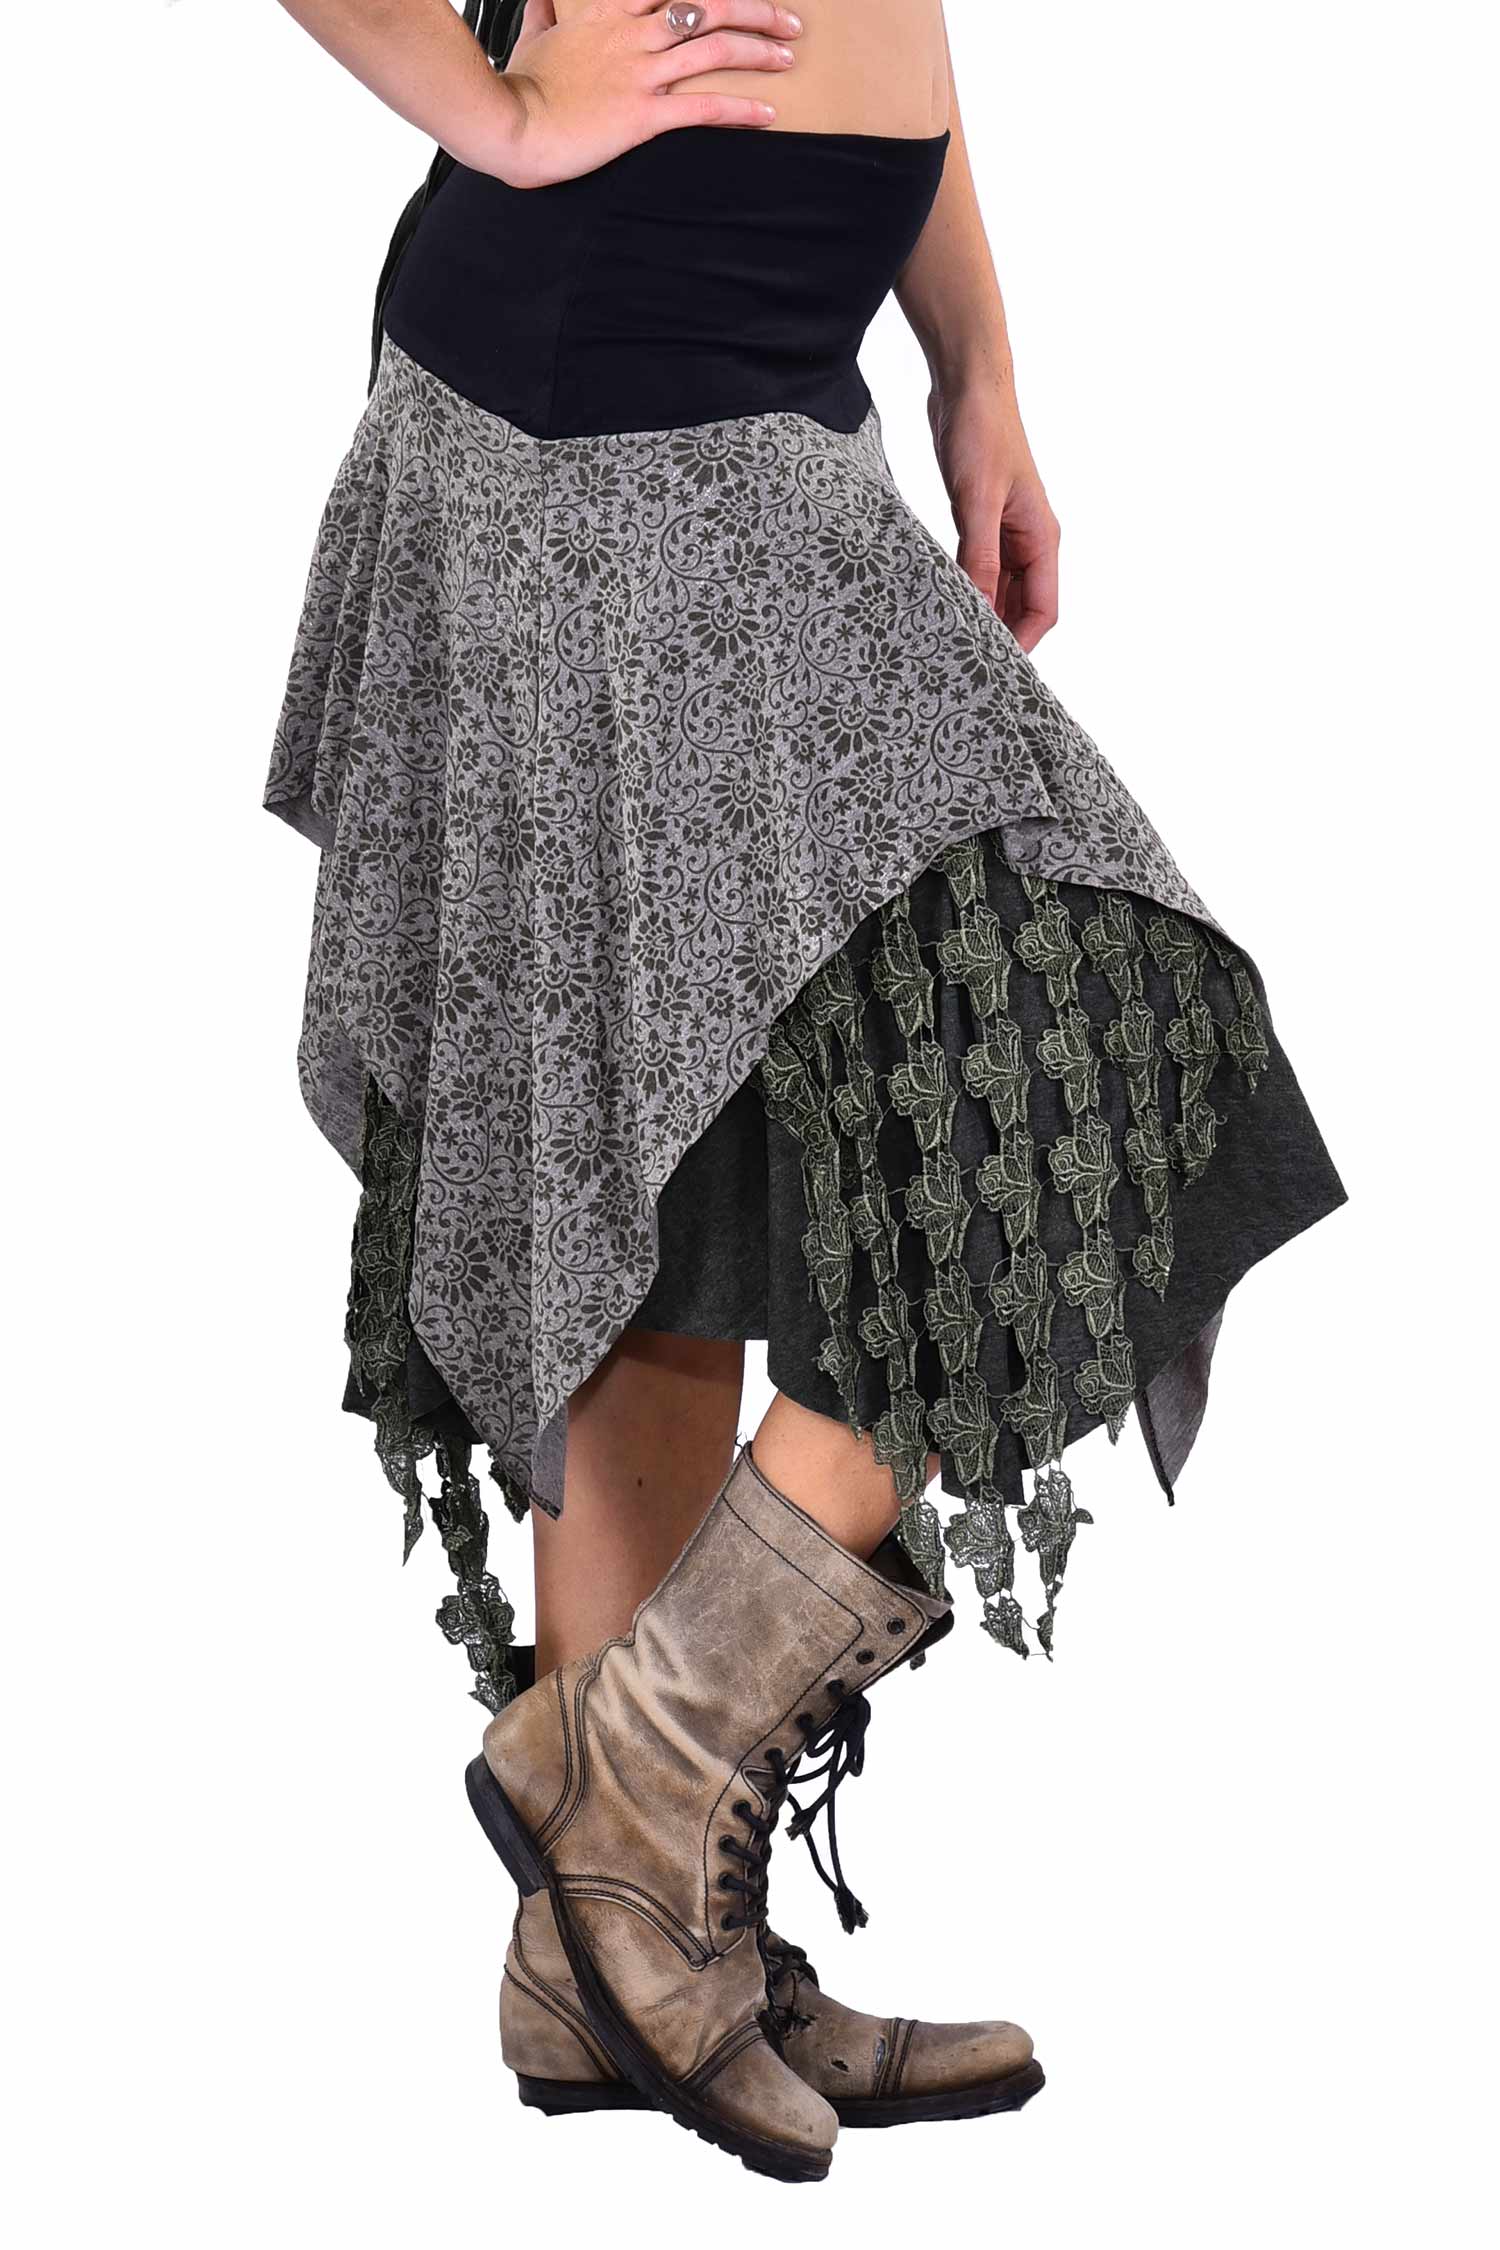 Pagan Wiccan Hippy Goddess Lace Layered Skirt | Altshop UK